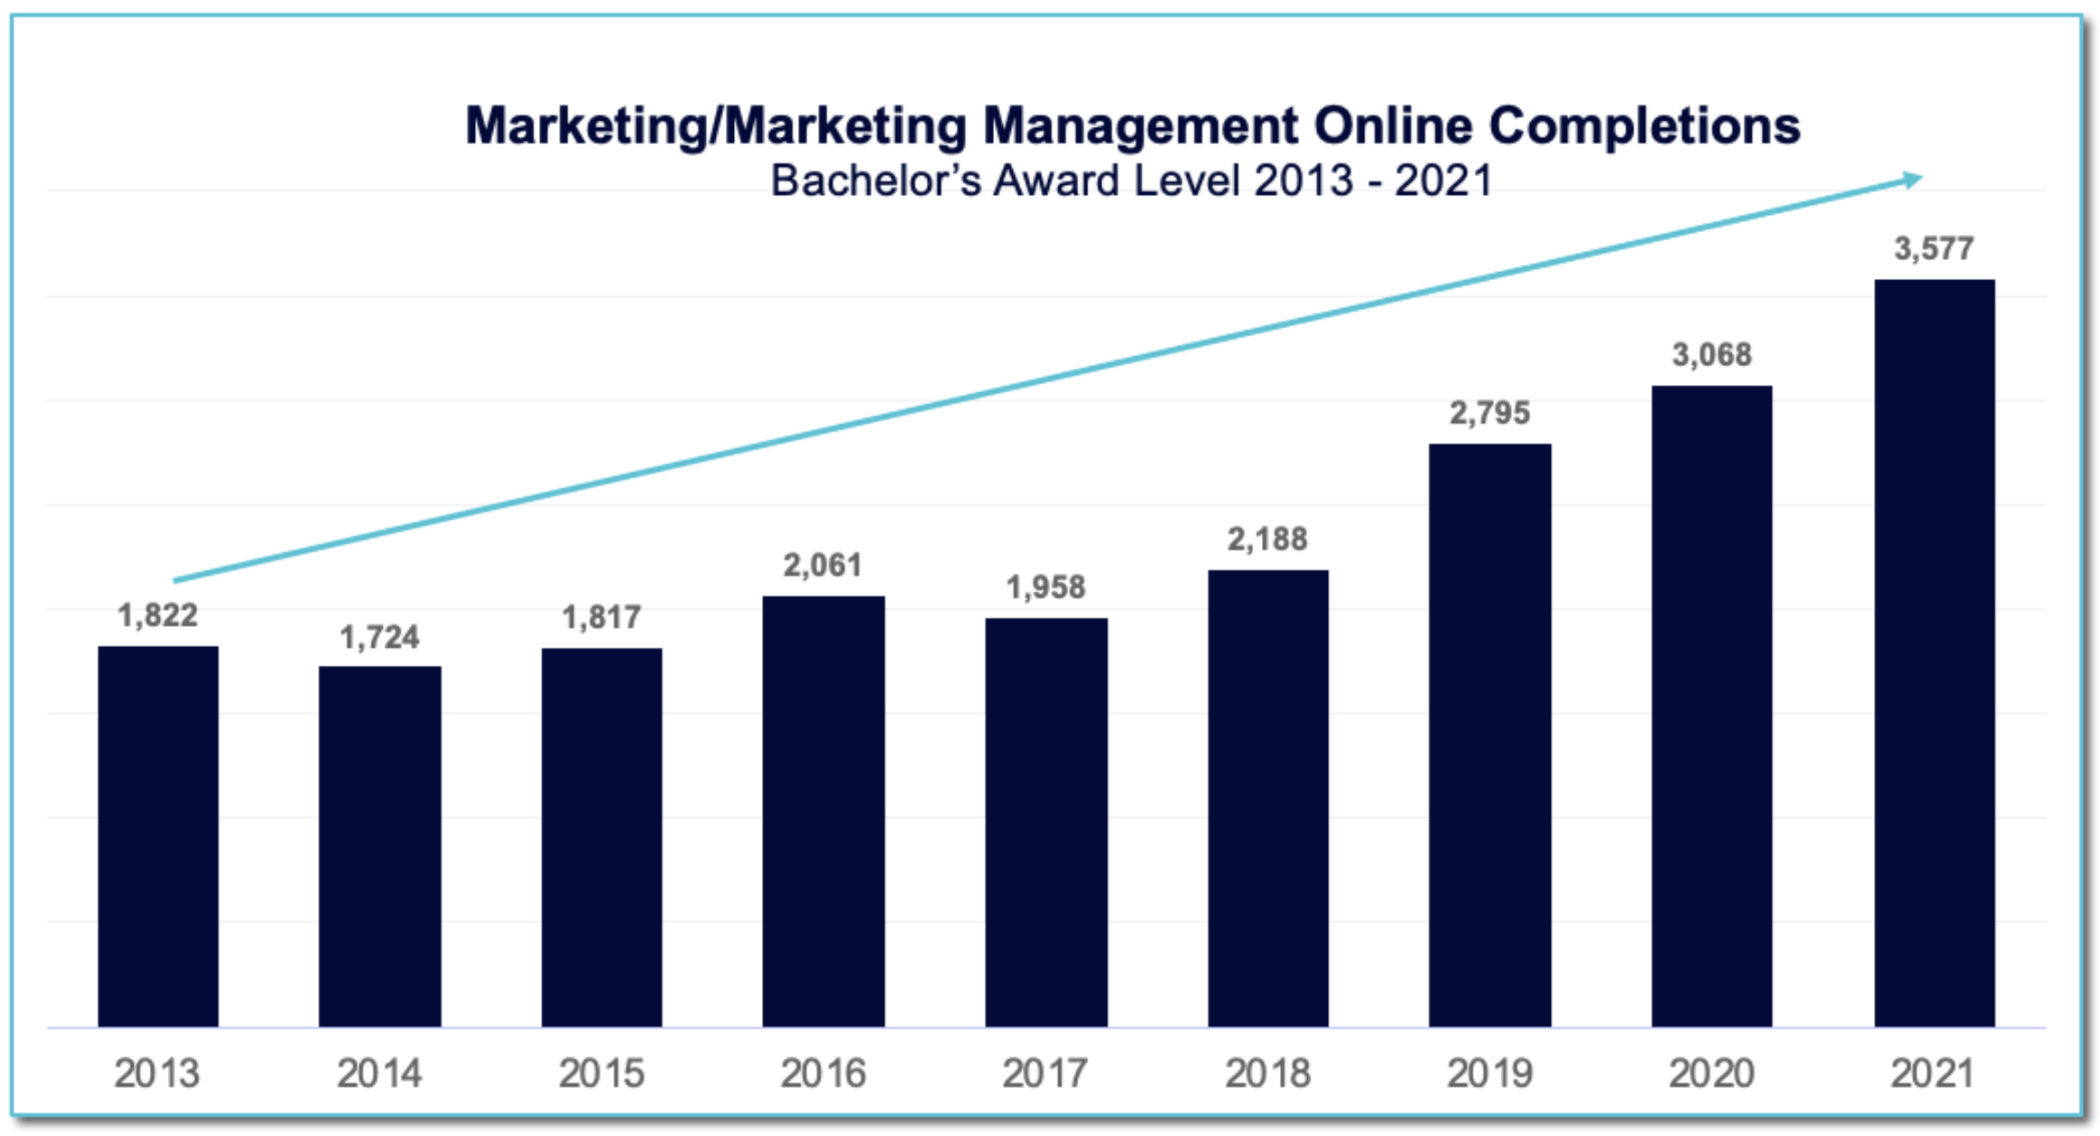 Marketing/marketing management online completions (bachelor's award level 2013-2021)